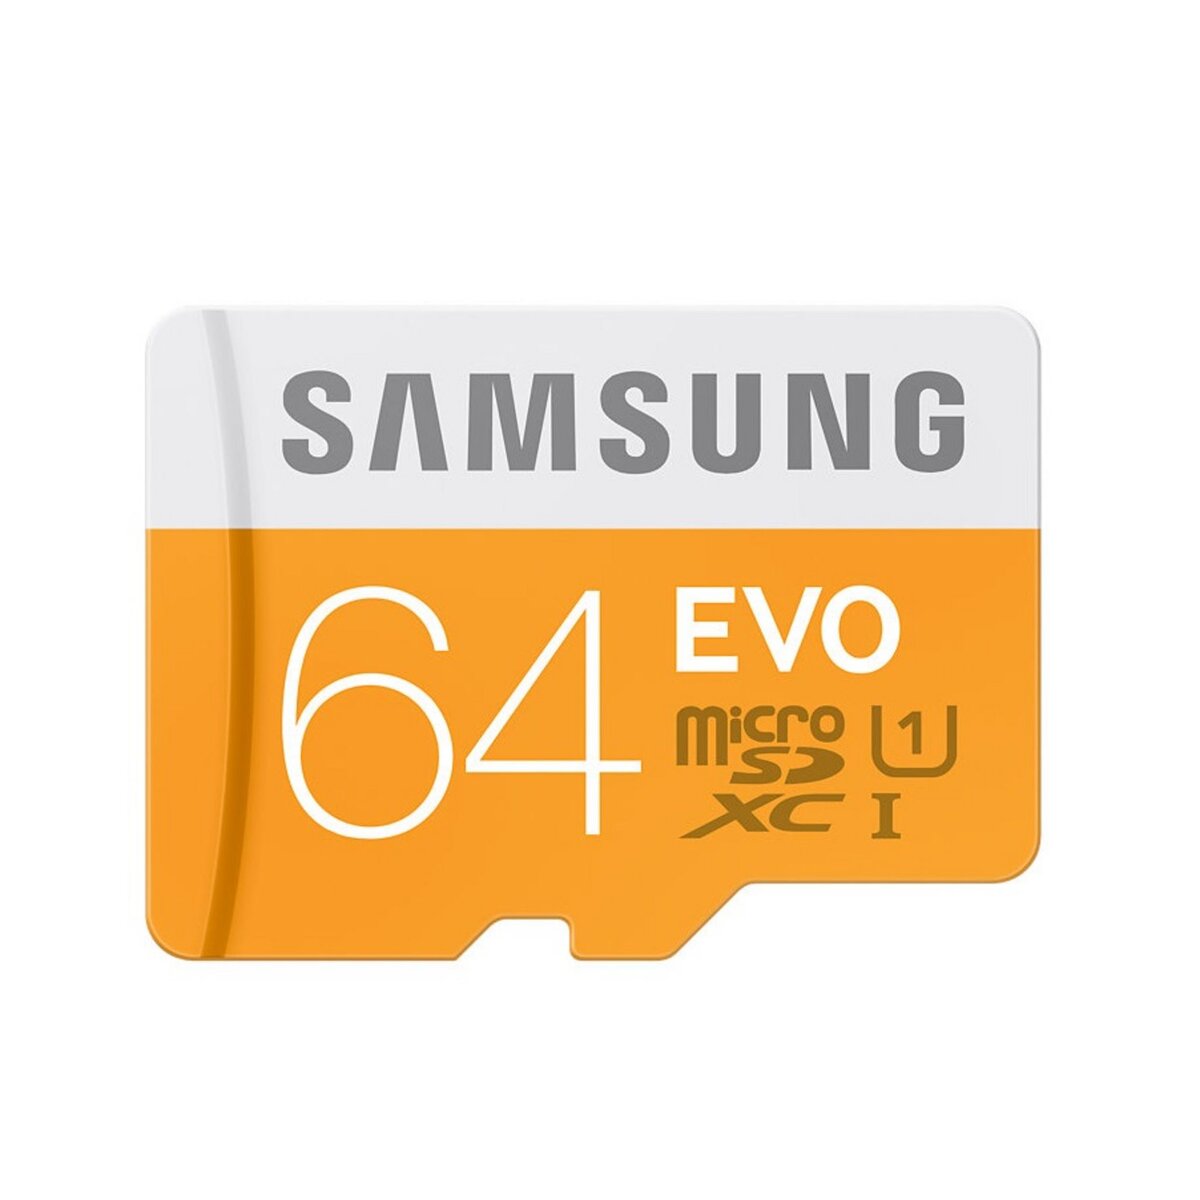 SAMSUNG Micro SDHC 64 Go Evo + Adaptateur USB - Carte mémoire